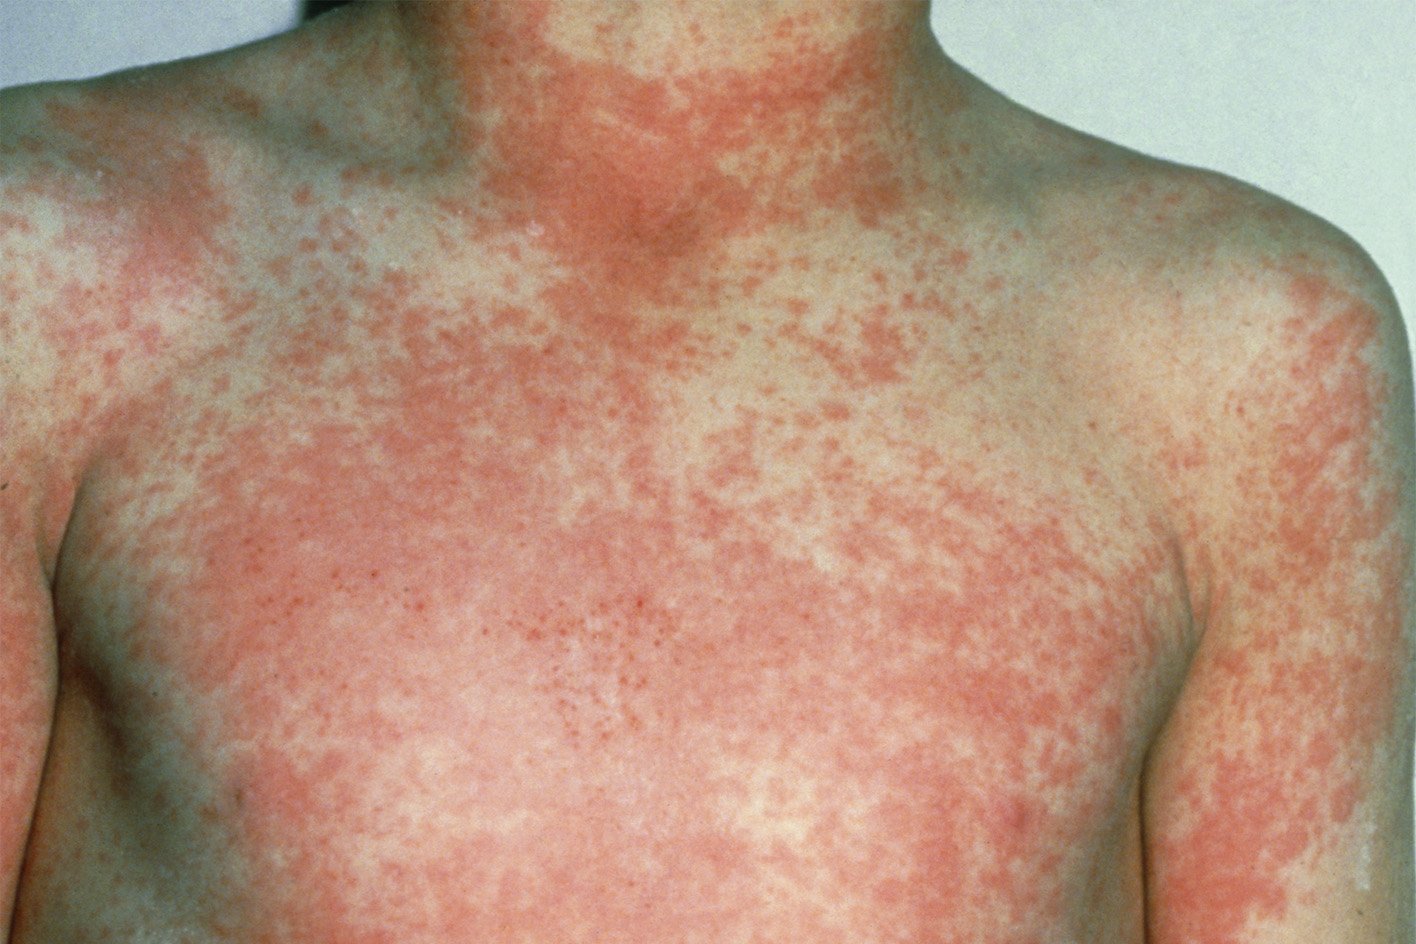 Scarlet fever rash - Strep A symptoms